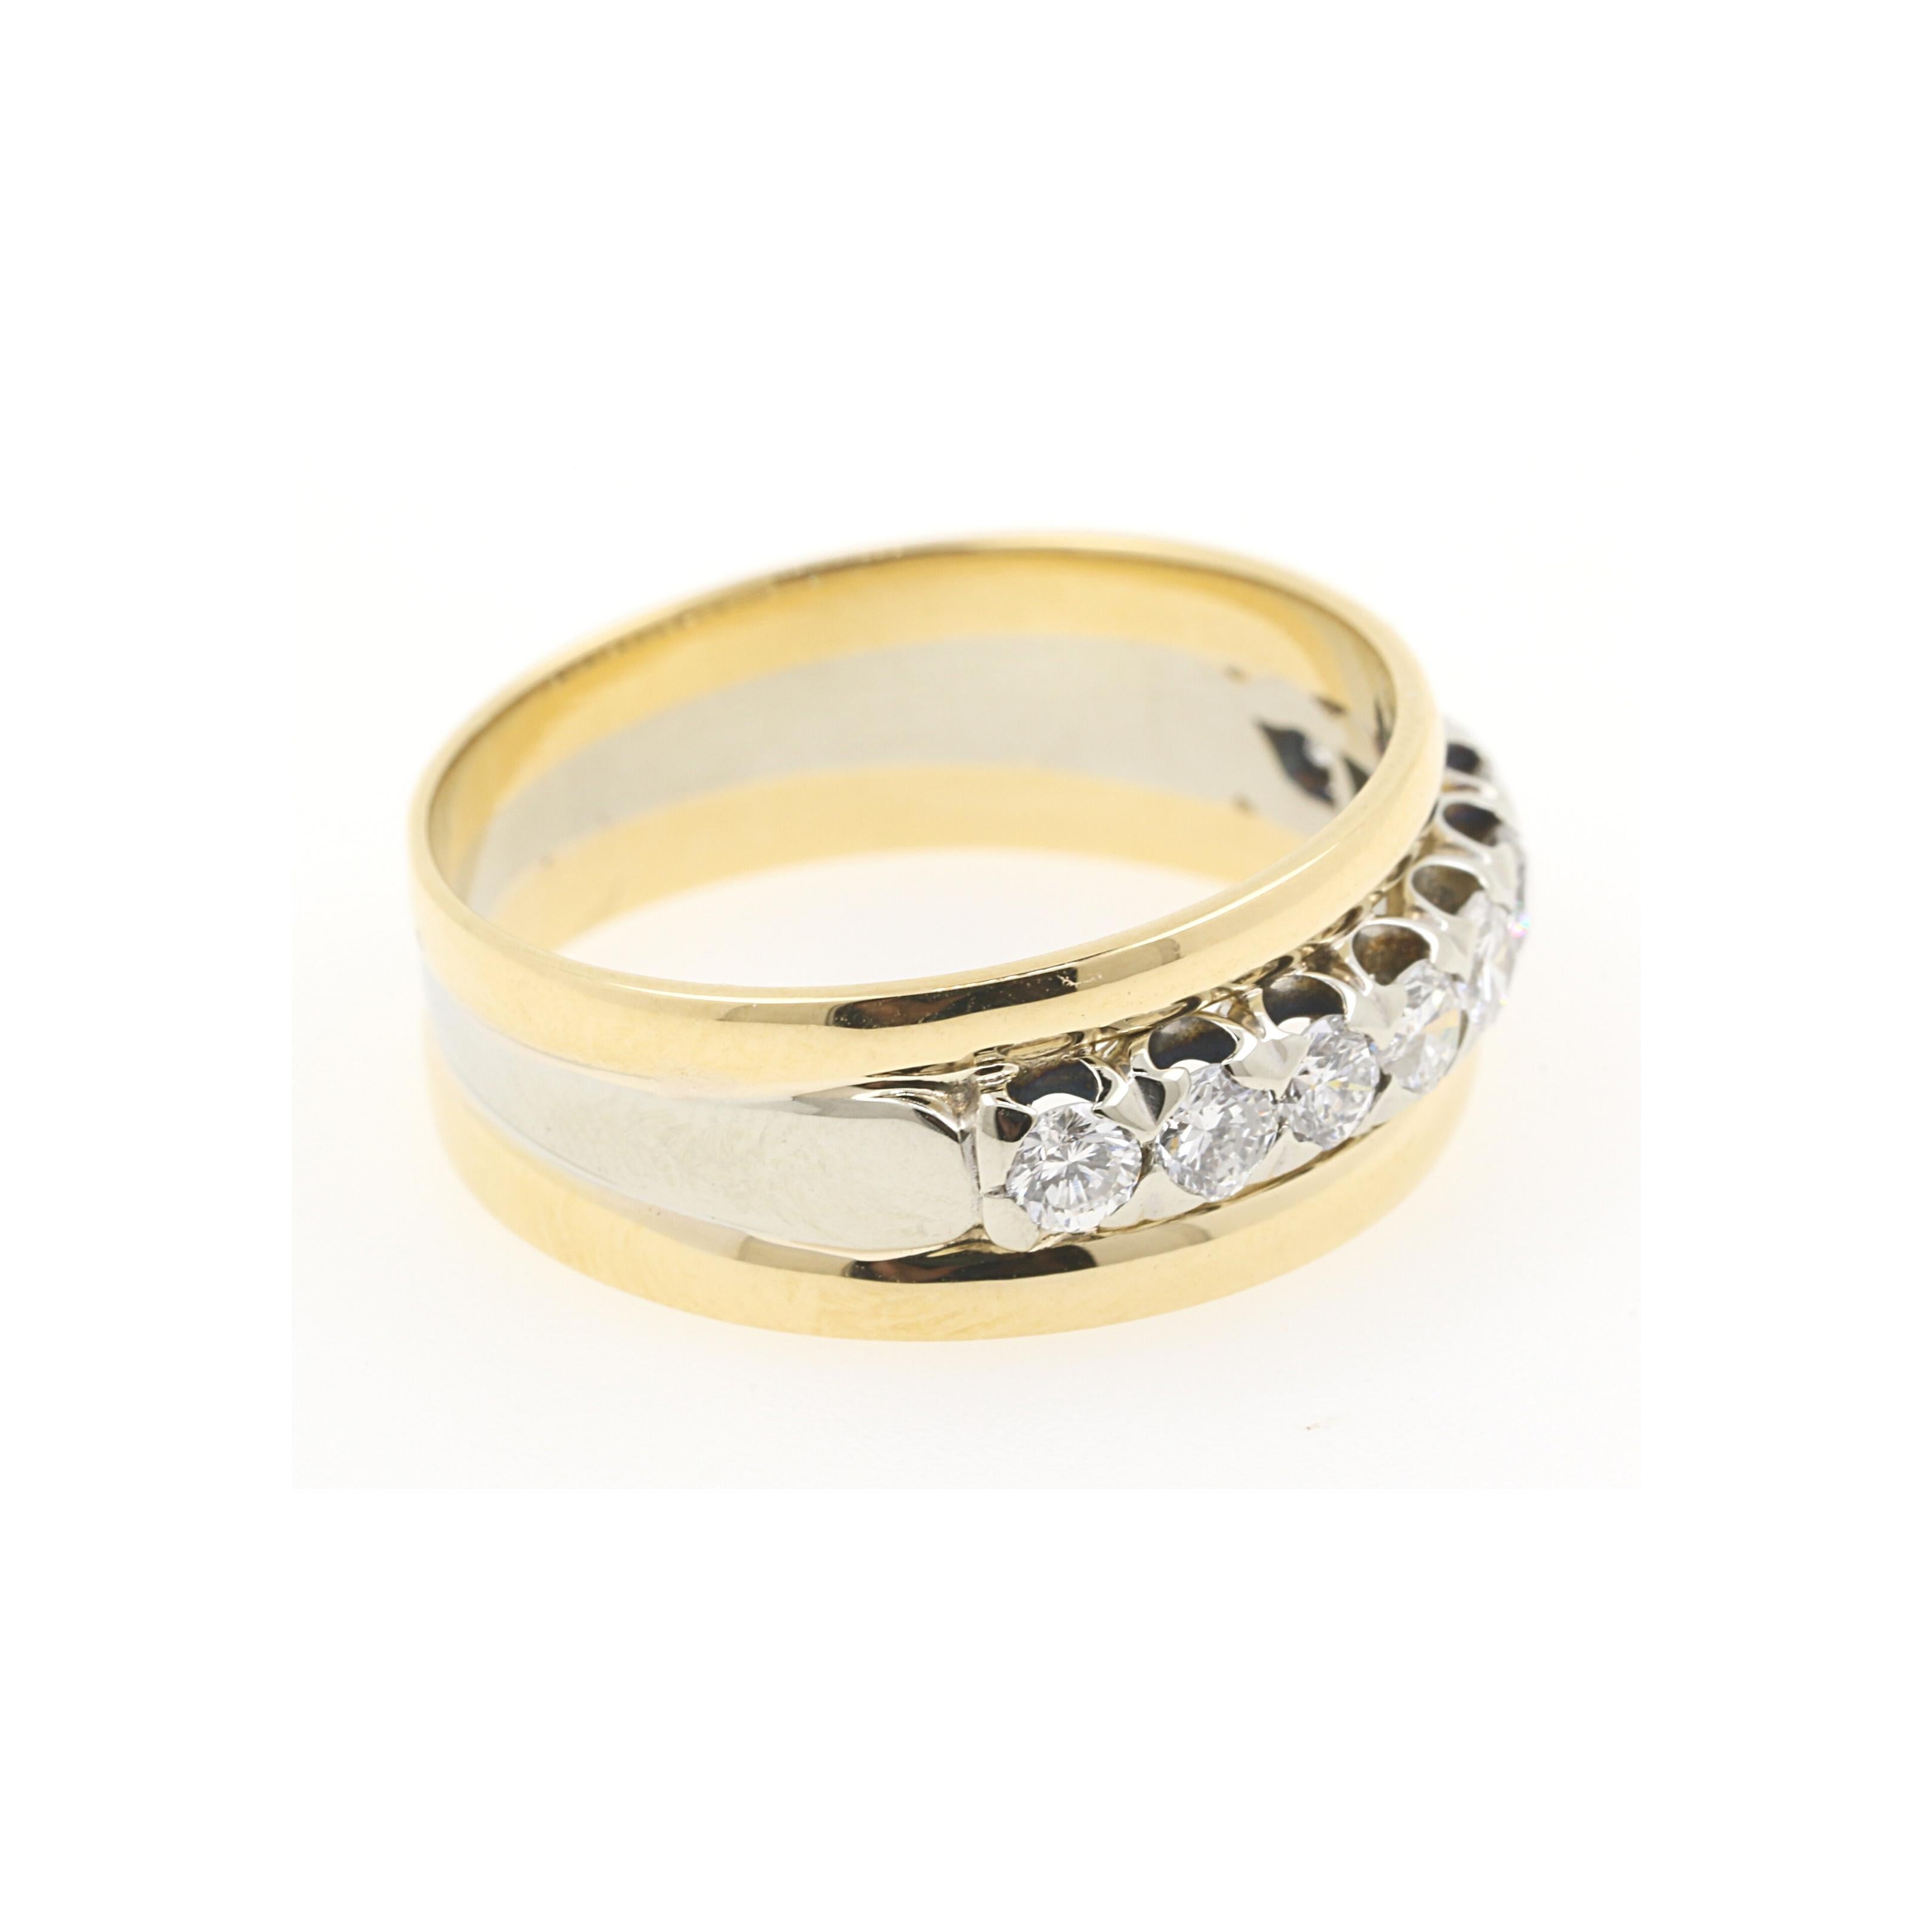 Contemporary 0.30 Carat Diamonds on 18 Karat Yellow and White Gold Wedding Band